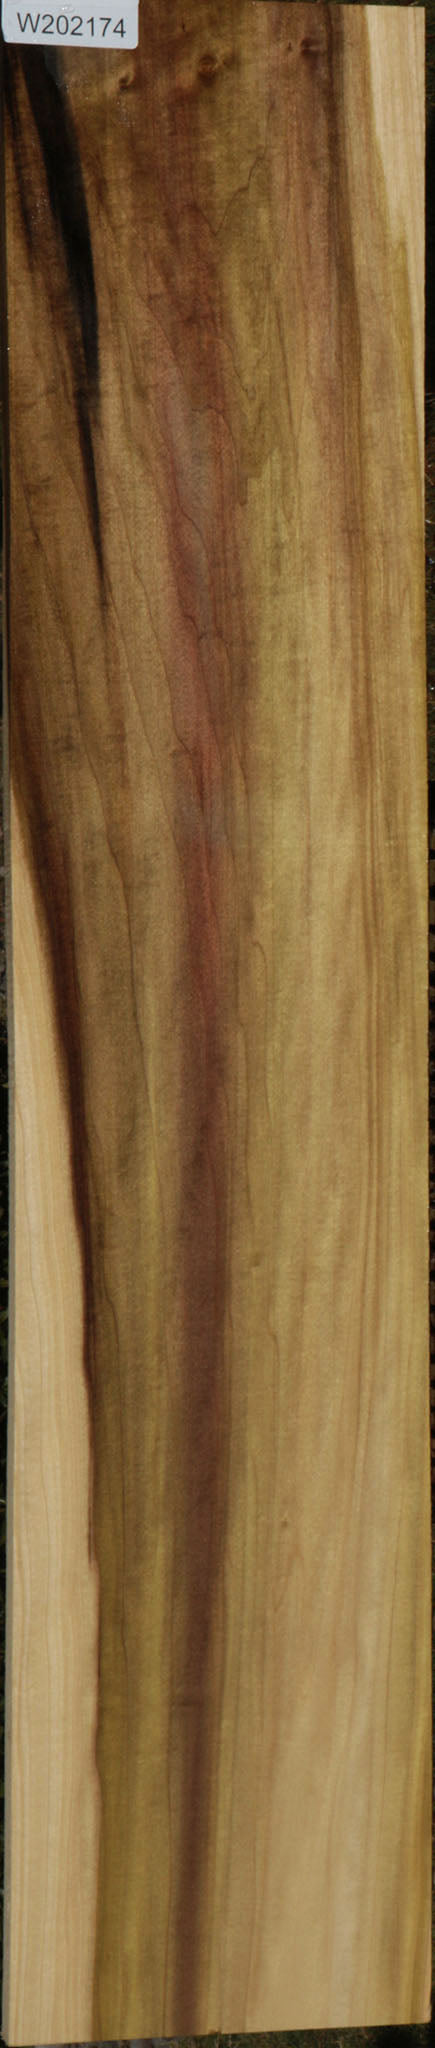 Purple Poplar Lumber